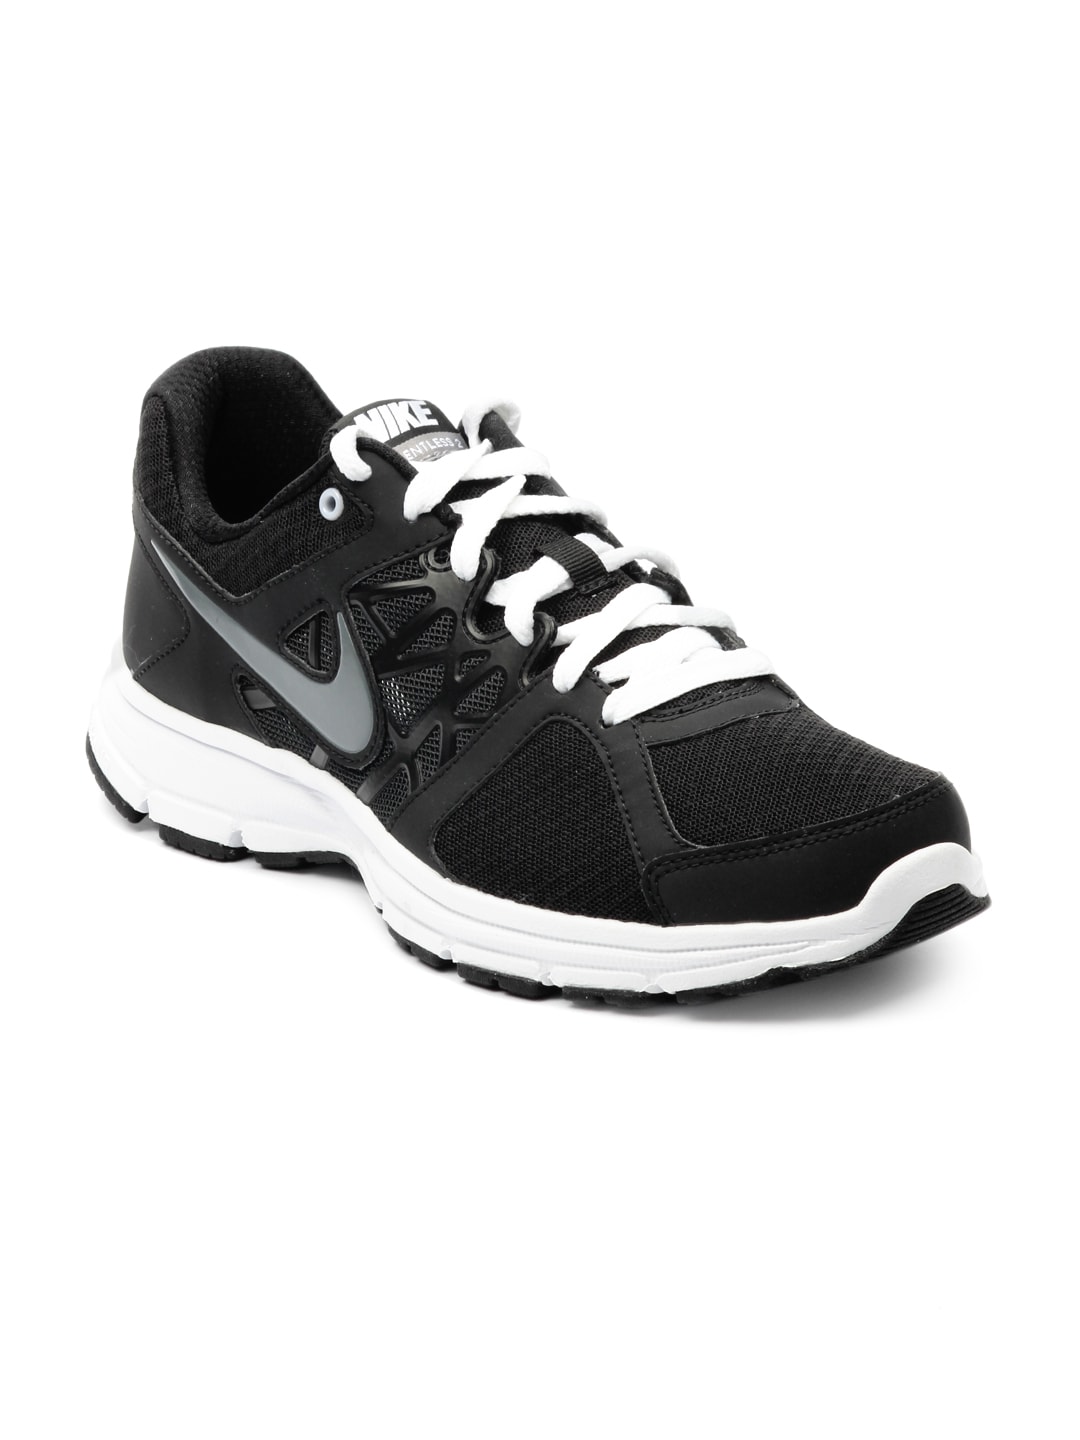 Nike Men Air Relentless Black Sports Shoes